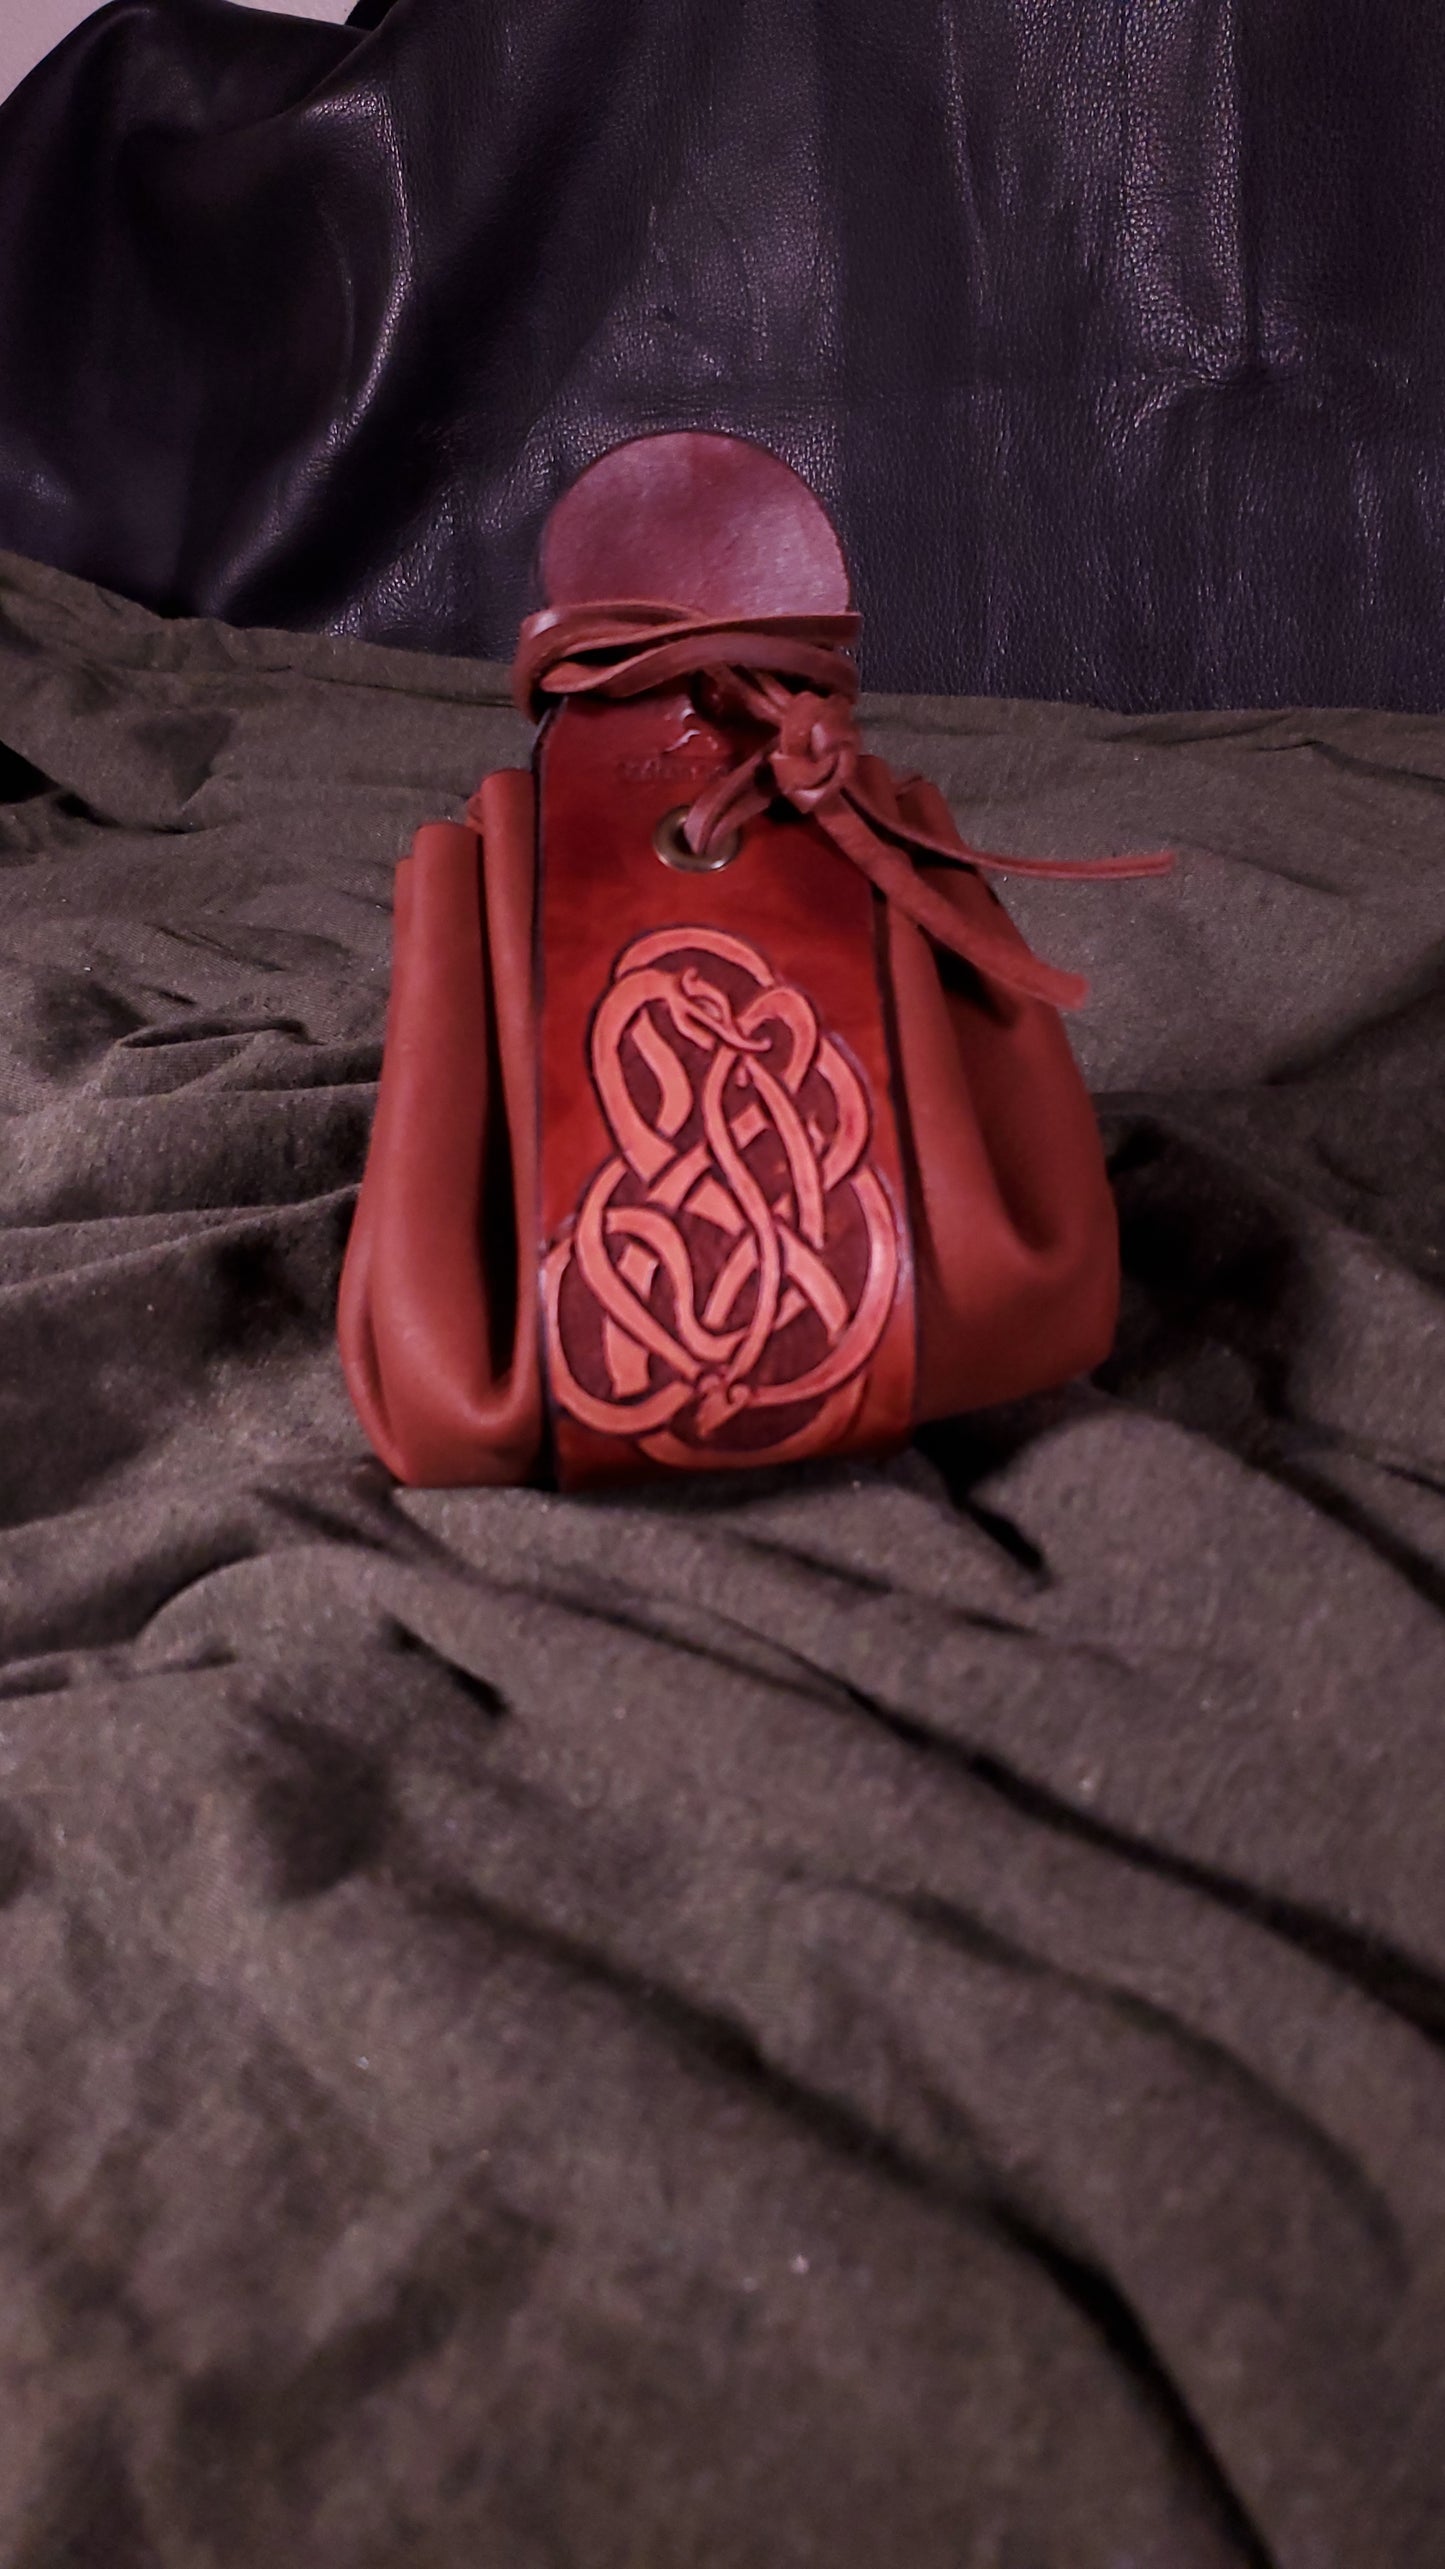 Tooled serpent Dice bag in a mahogany color closed